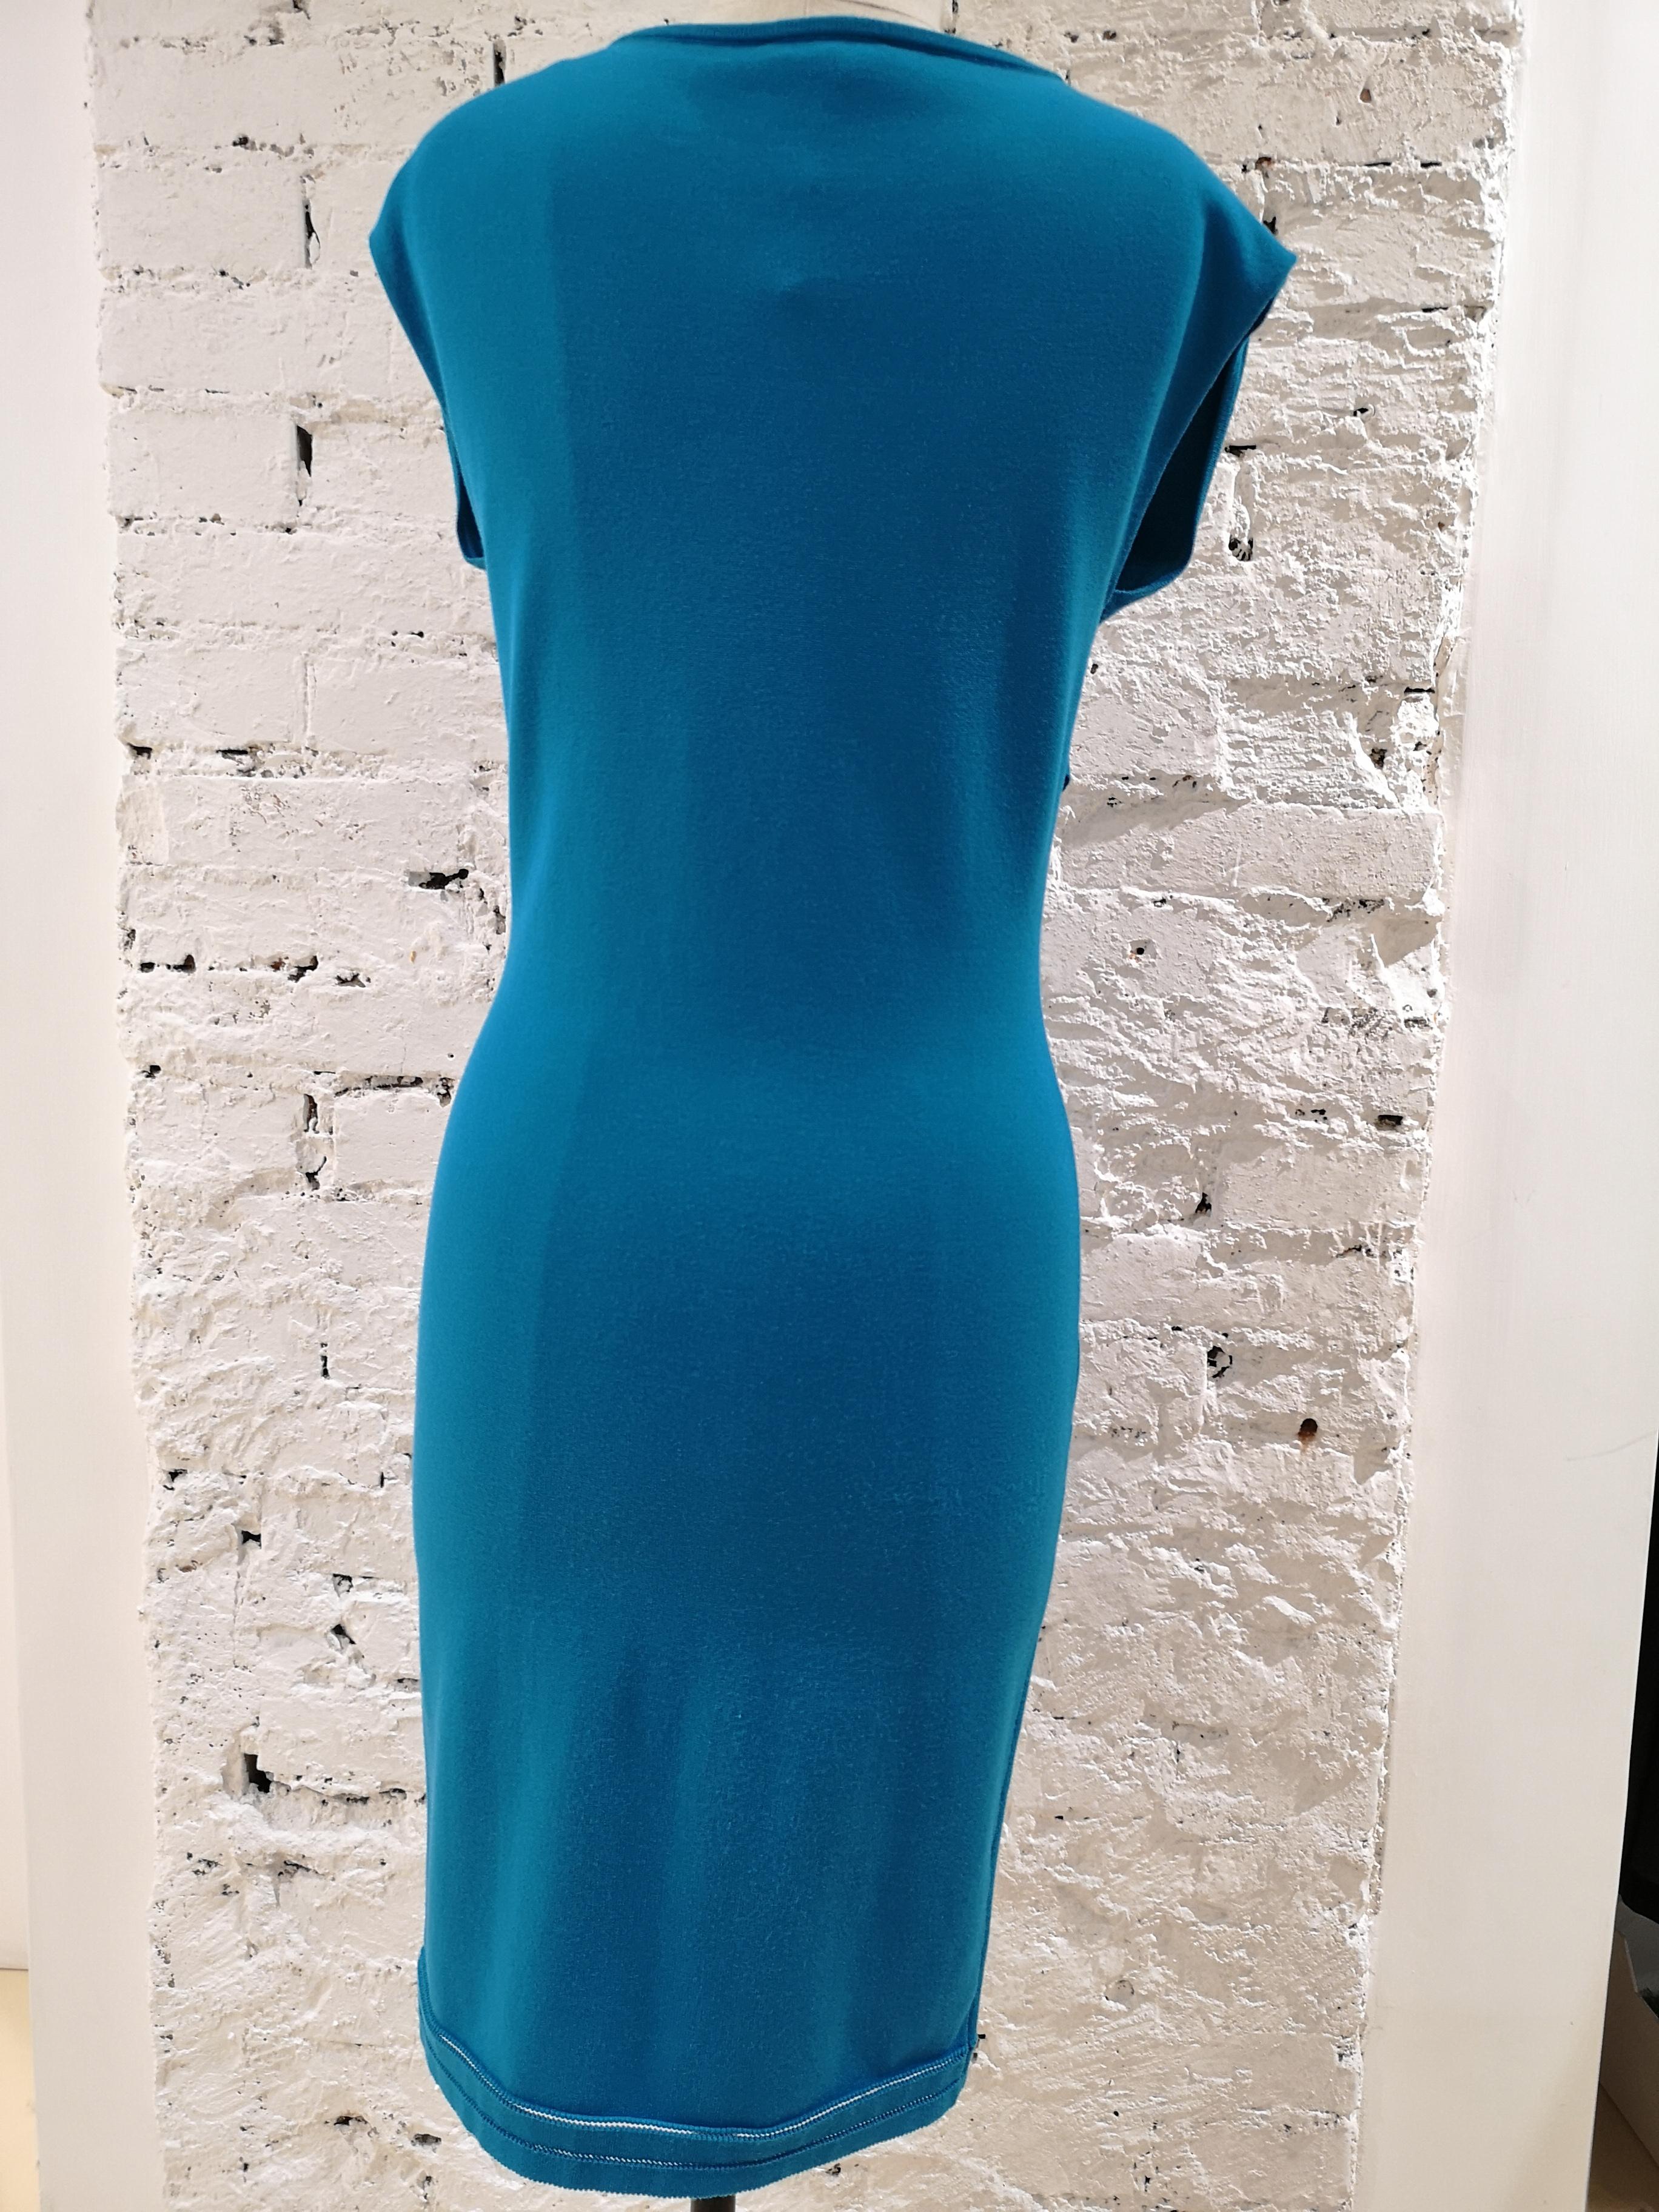 Versace Collecction Blue Dress NWOT 2